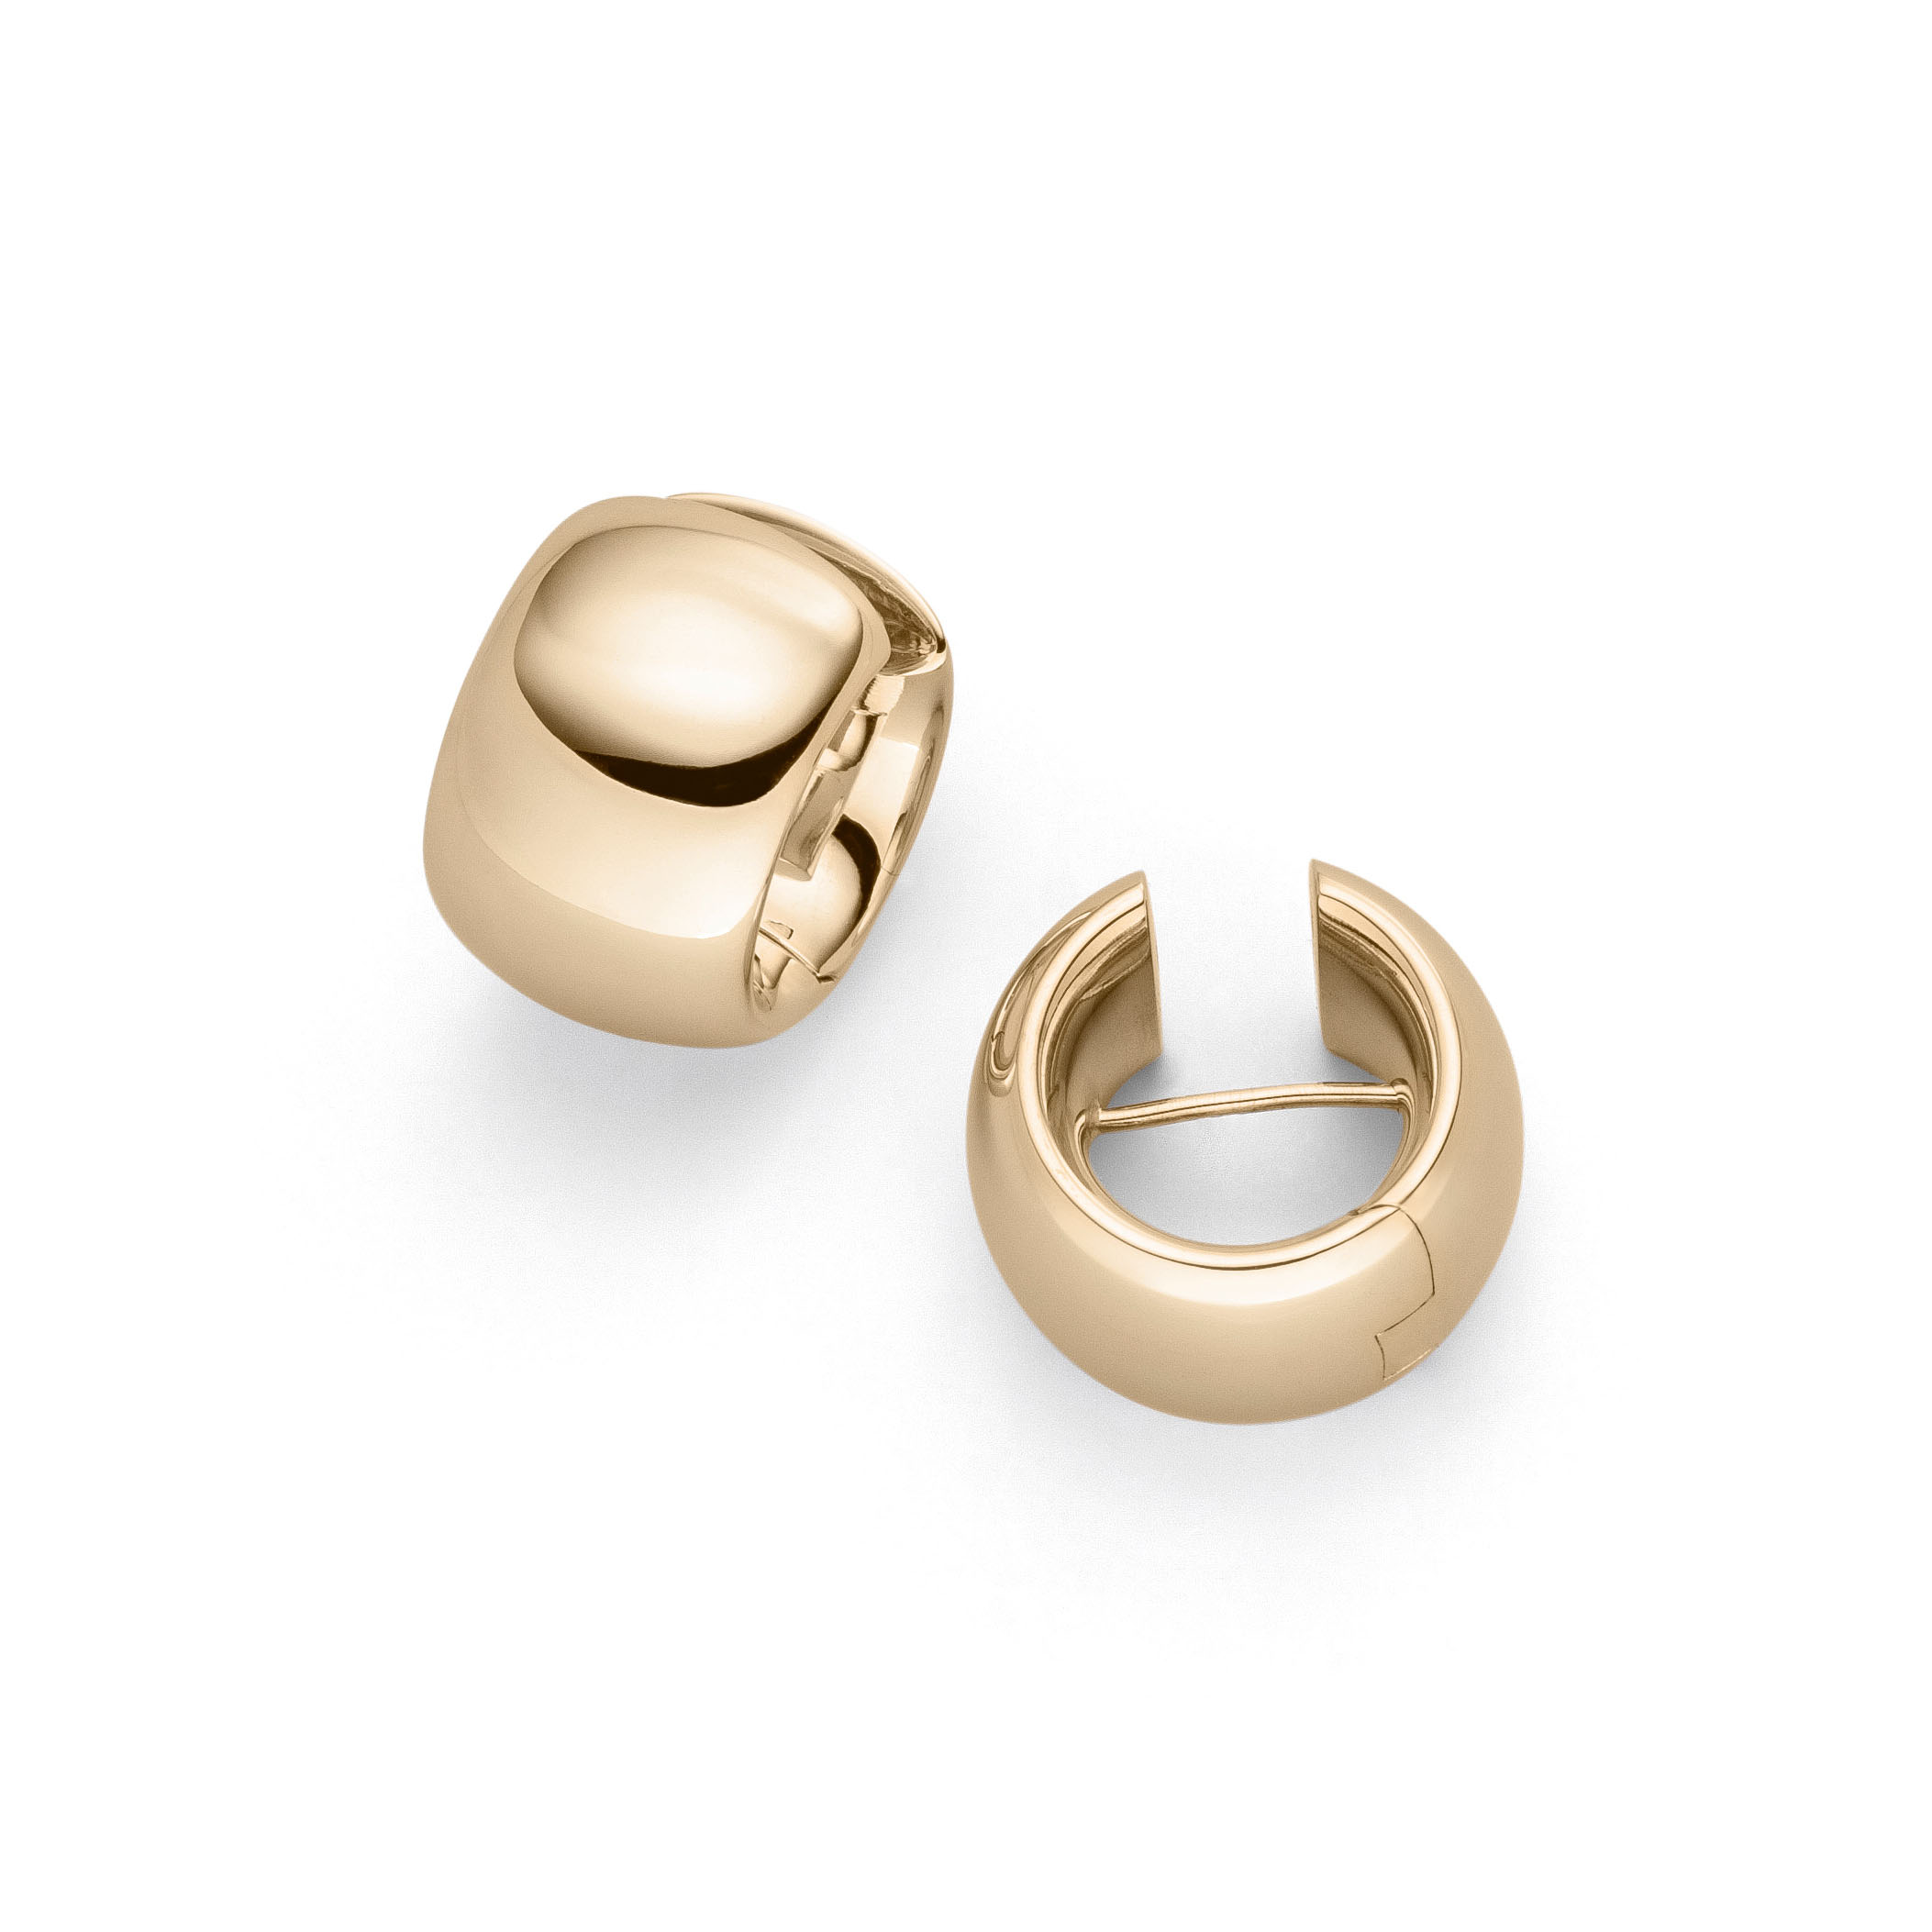 Wholesale OEM/ODM Jewelry Custom gold plated silver earrings ear studs Gold polish earrings with guarantee